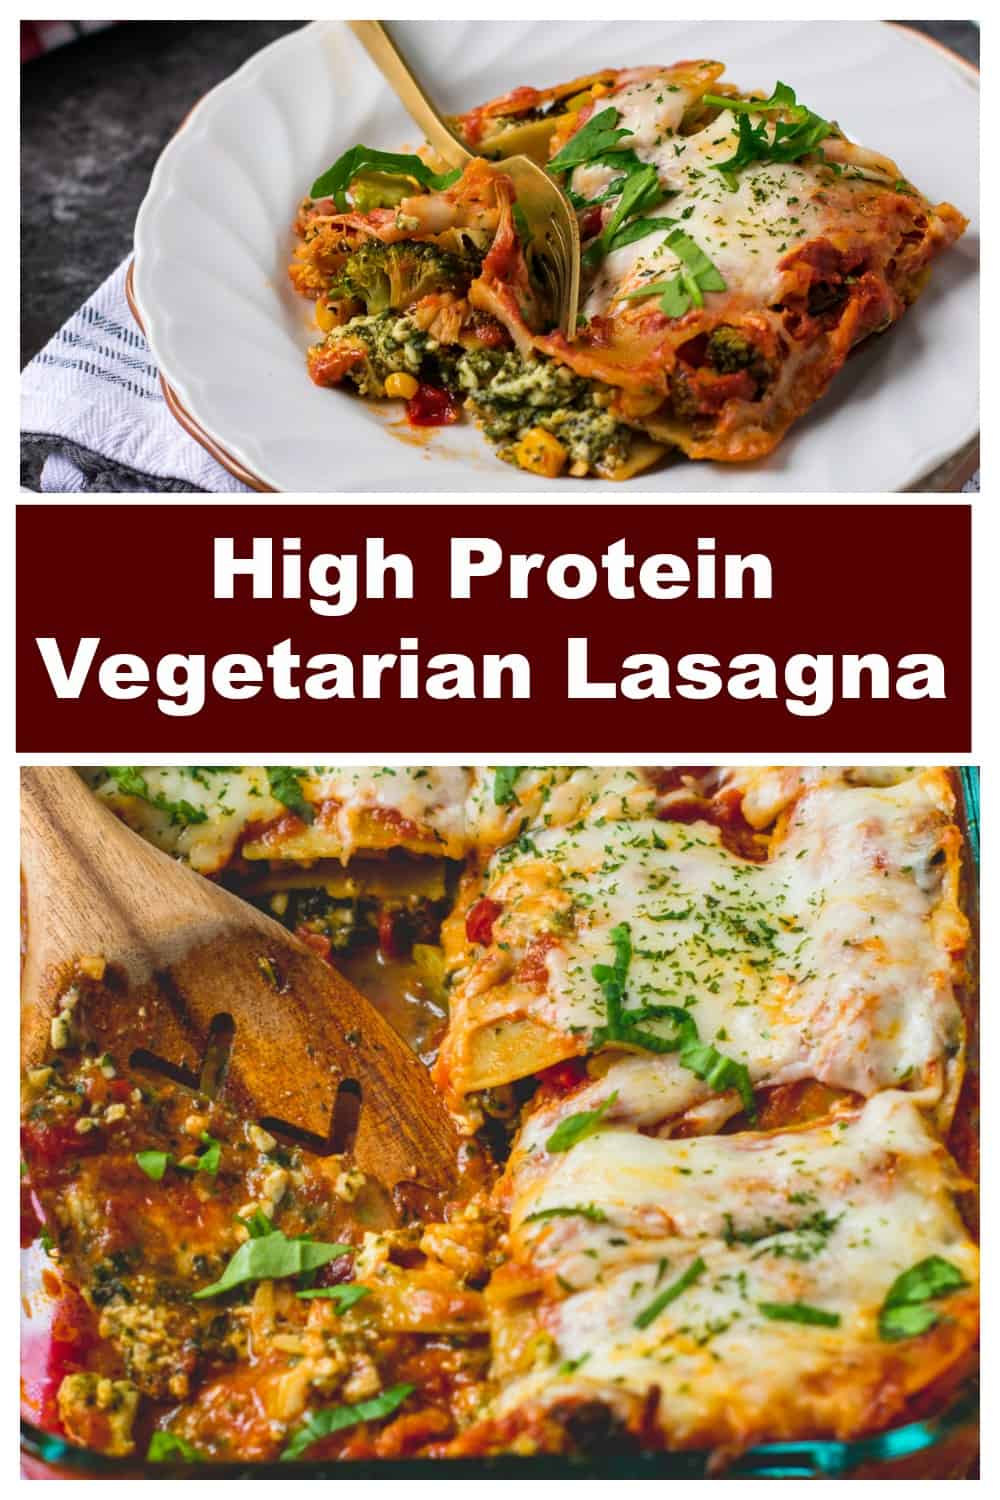 High protein vegetarian lasagna in a baking dish